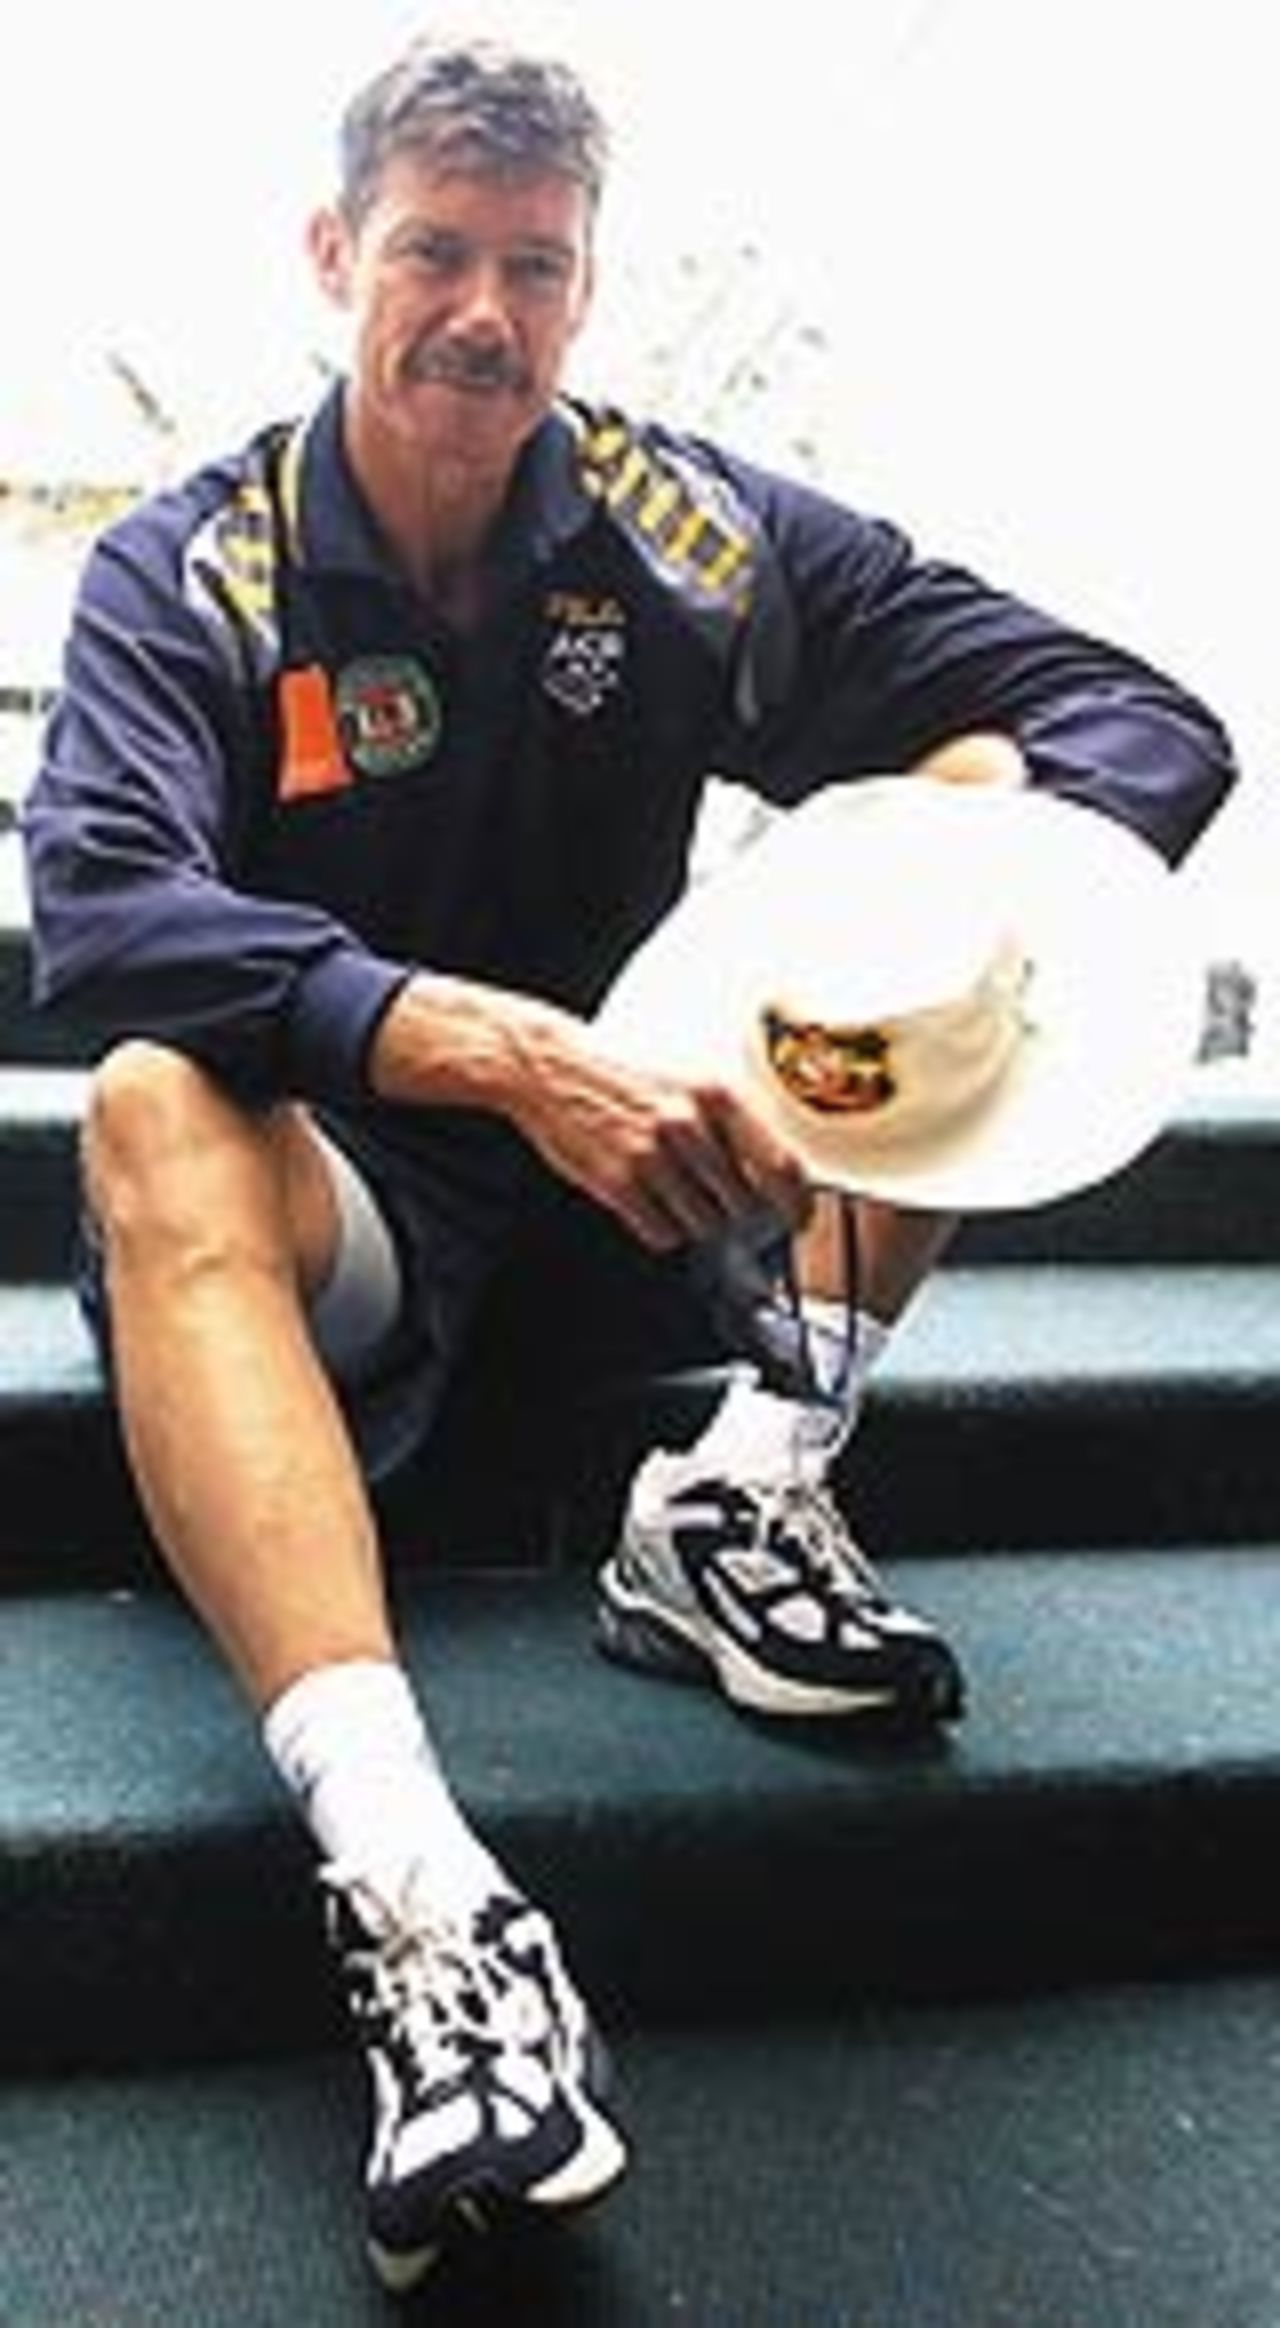 Portrait of John Buchanan the Australian coach during the Australian nets session at the Gabba cricket ground, Brisbane, Australia on November 6, 2002